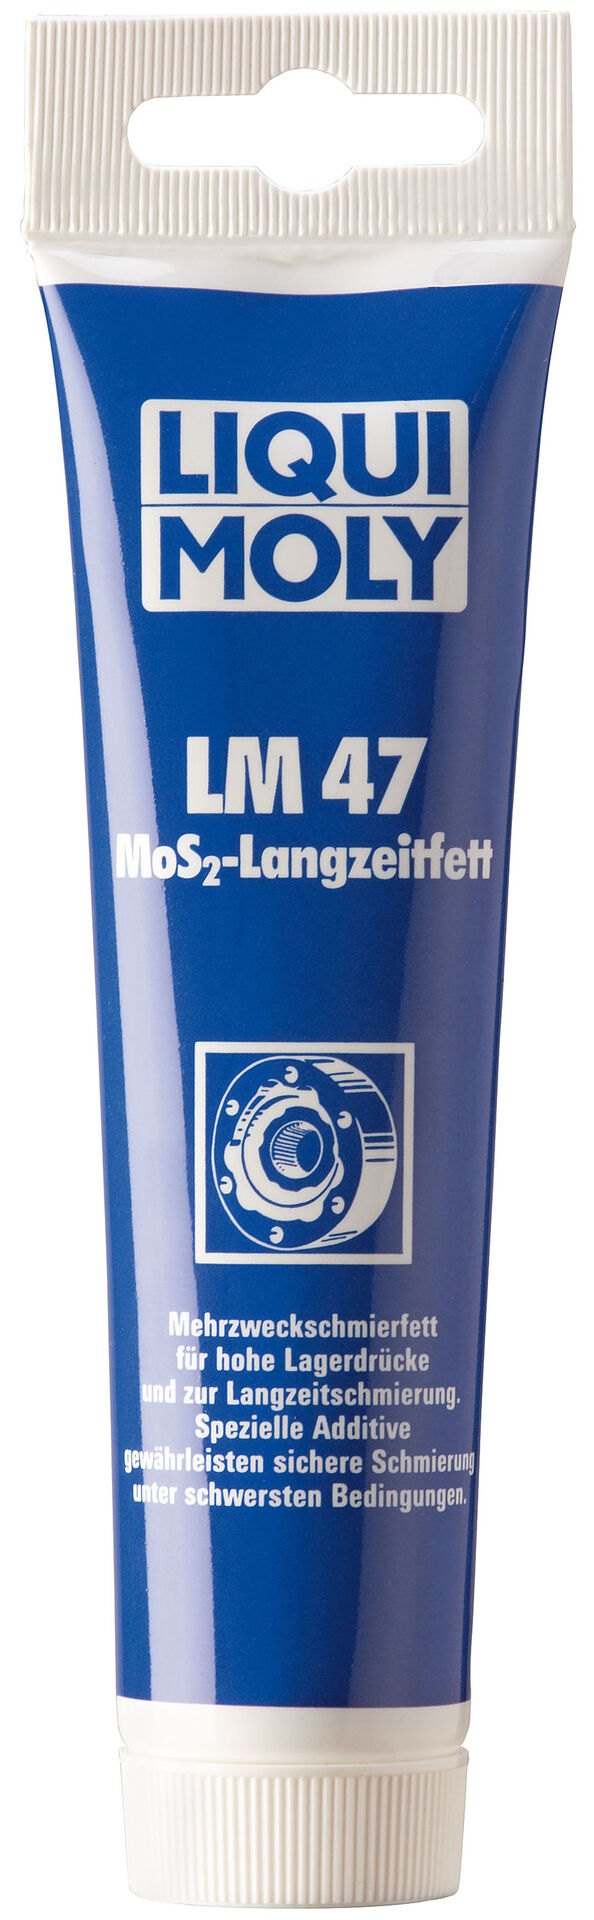 Liqui Moly 100g LM 47 Langzeitfett MoS2 Mehrzweckfett Graphitfett Spezialfett